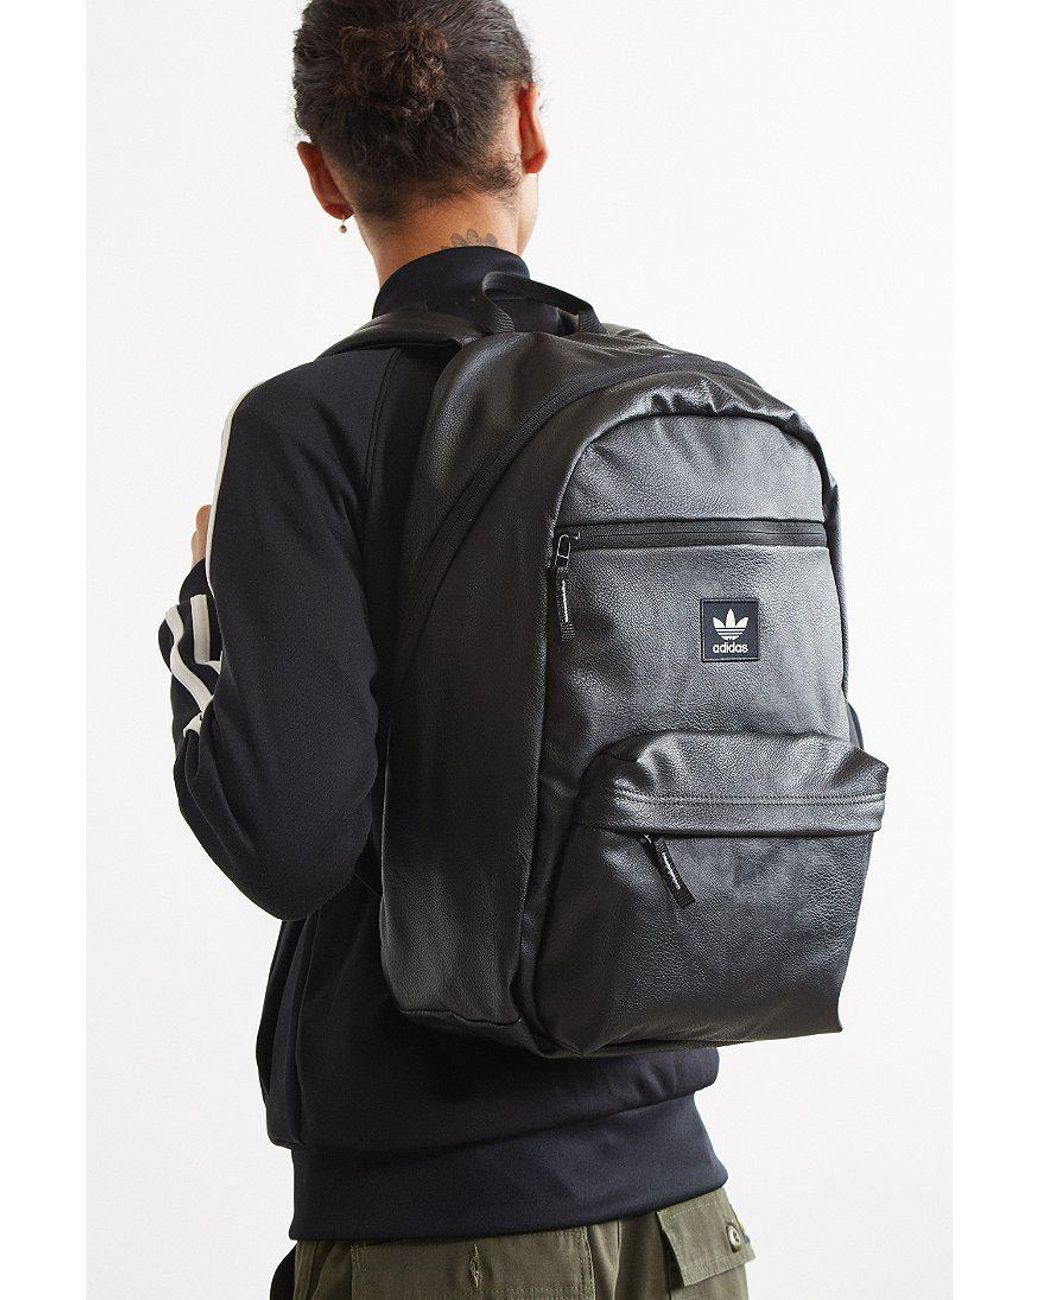 adidas Originals Originals National Premium Faux Leather Backpack in Black  for Men | Lyst